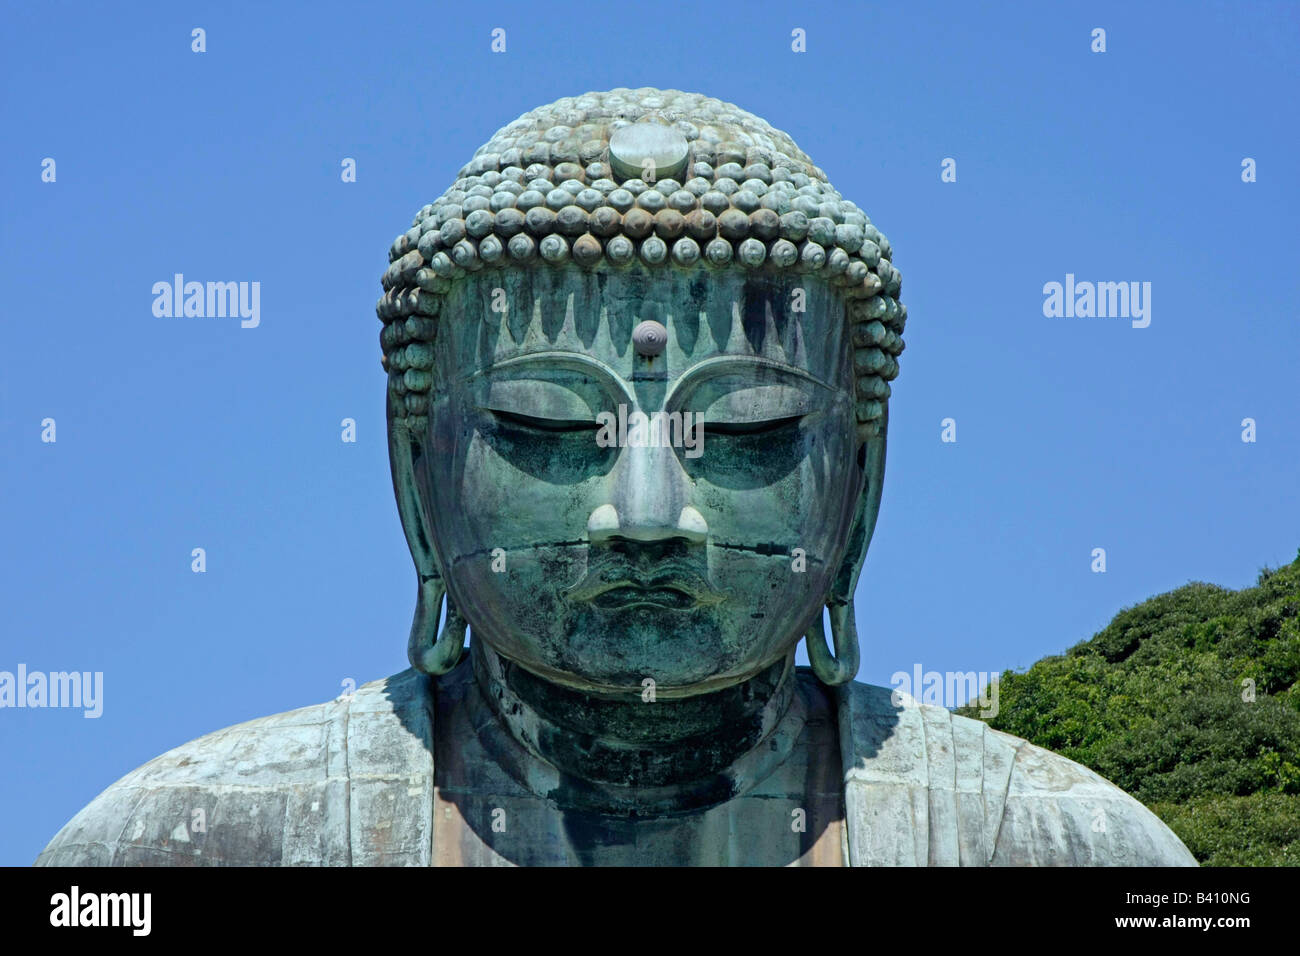 The Great Buddha of Kamakura Kanagawa Japan Stock Photo